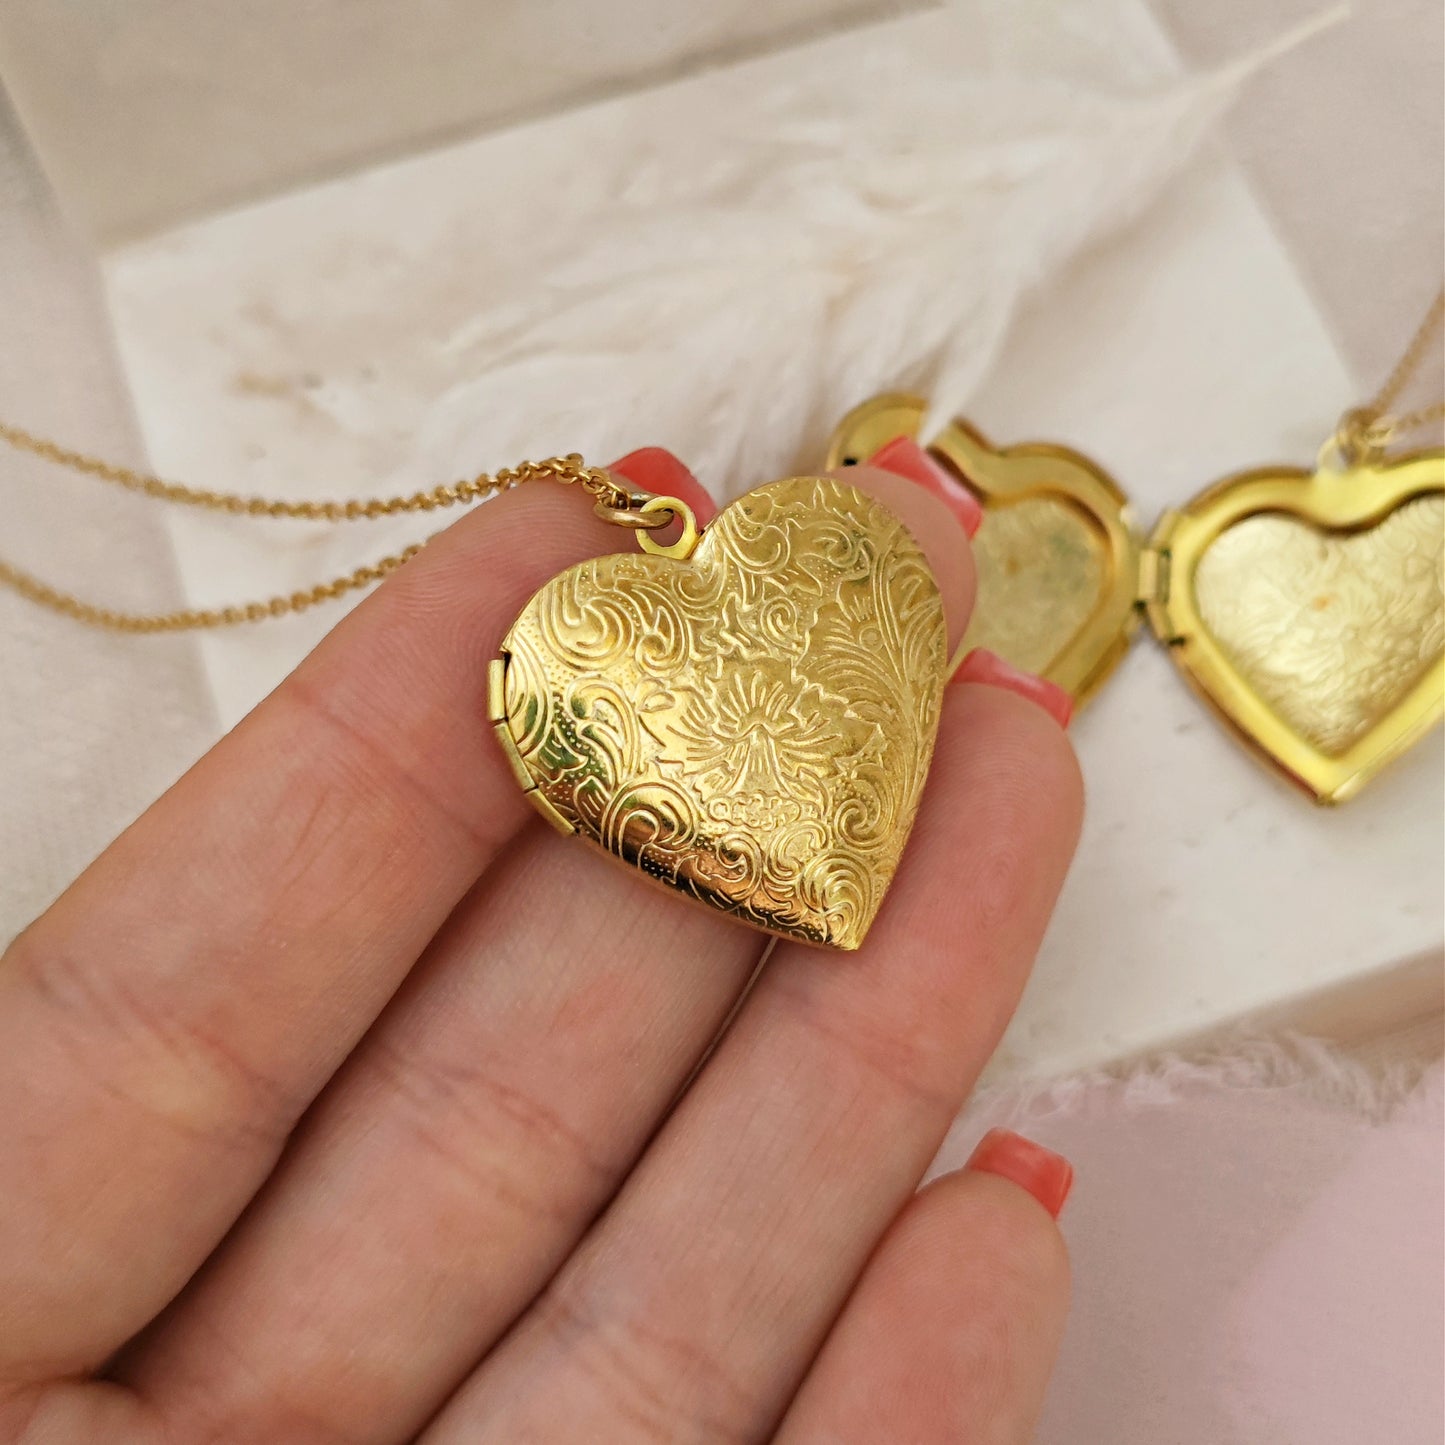 Heart Locket Necklace, Friendship Necklace, Medium size